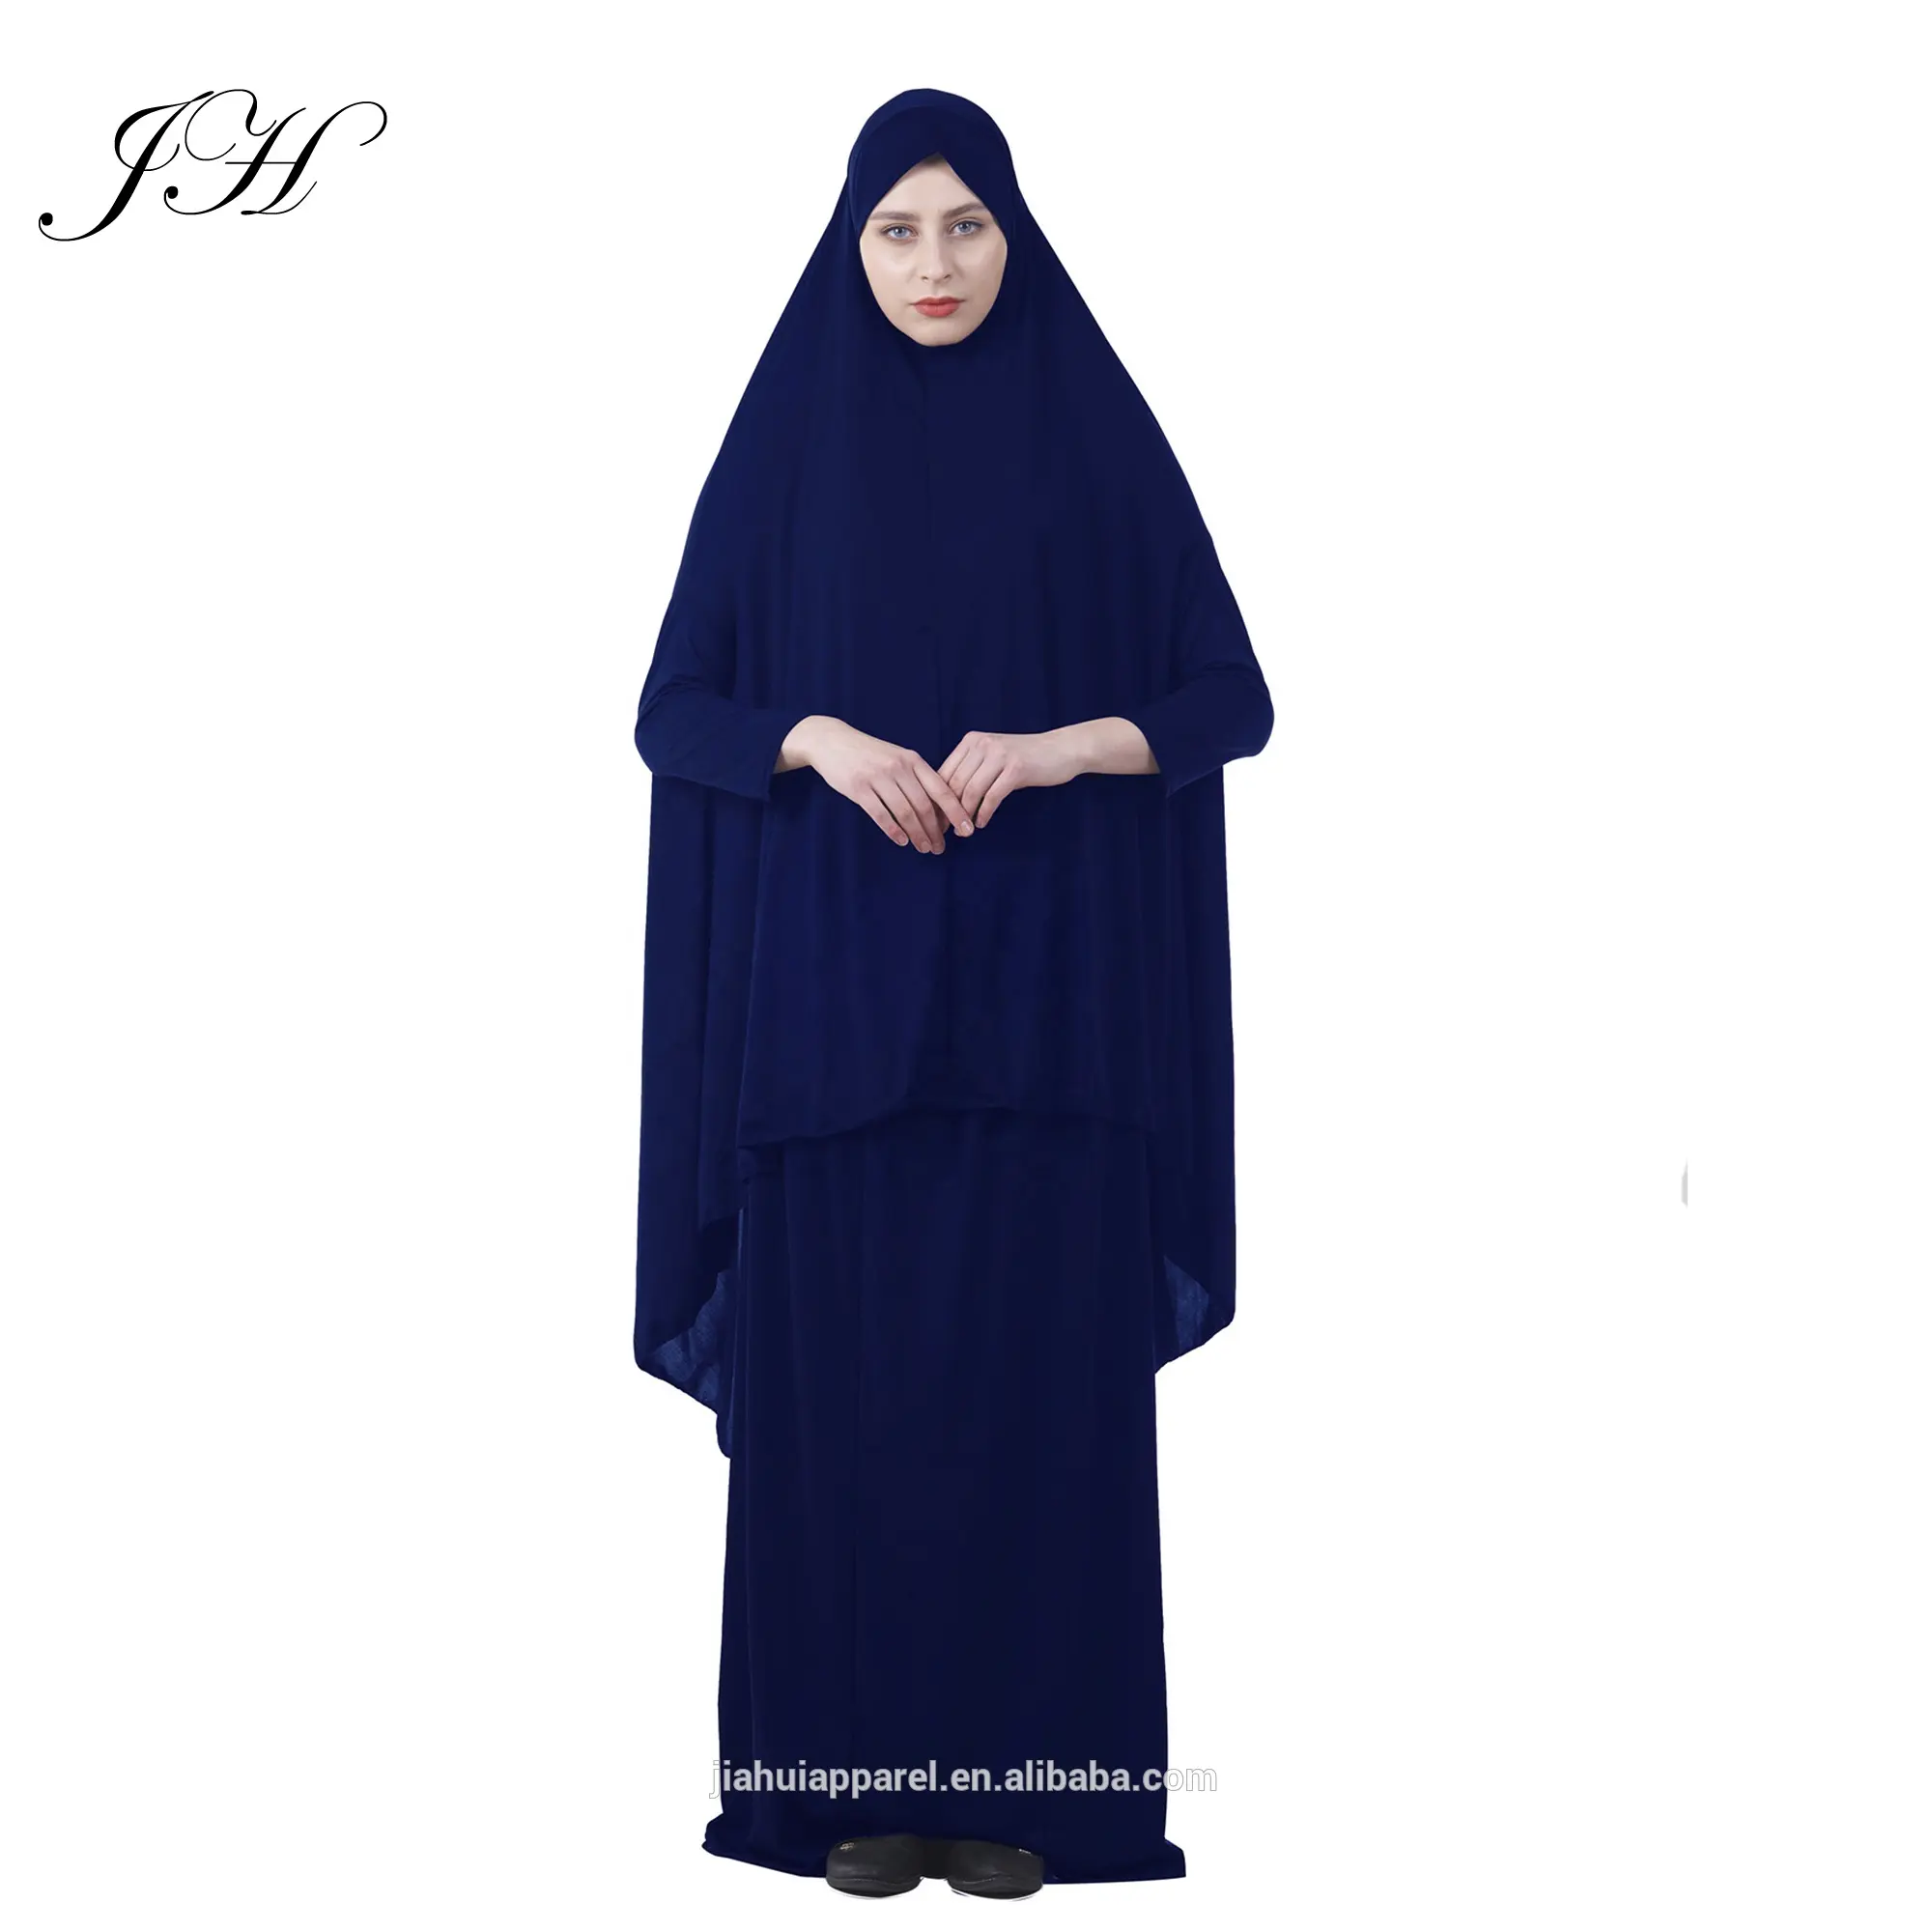 Baju Abaya Baru 2019 Warna Polos Dua Potong, Baju Doa Muslim Jilbab Panjang Baju Islami